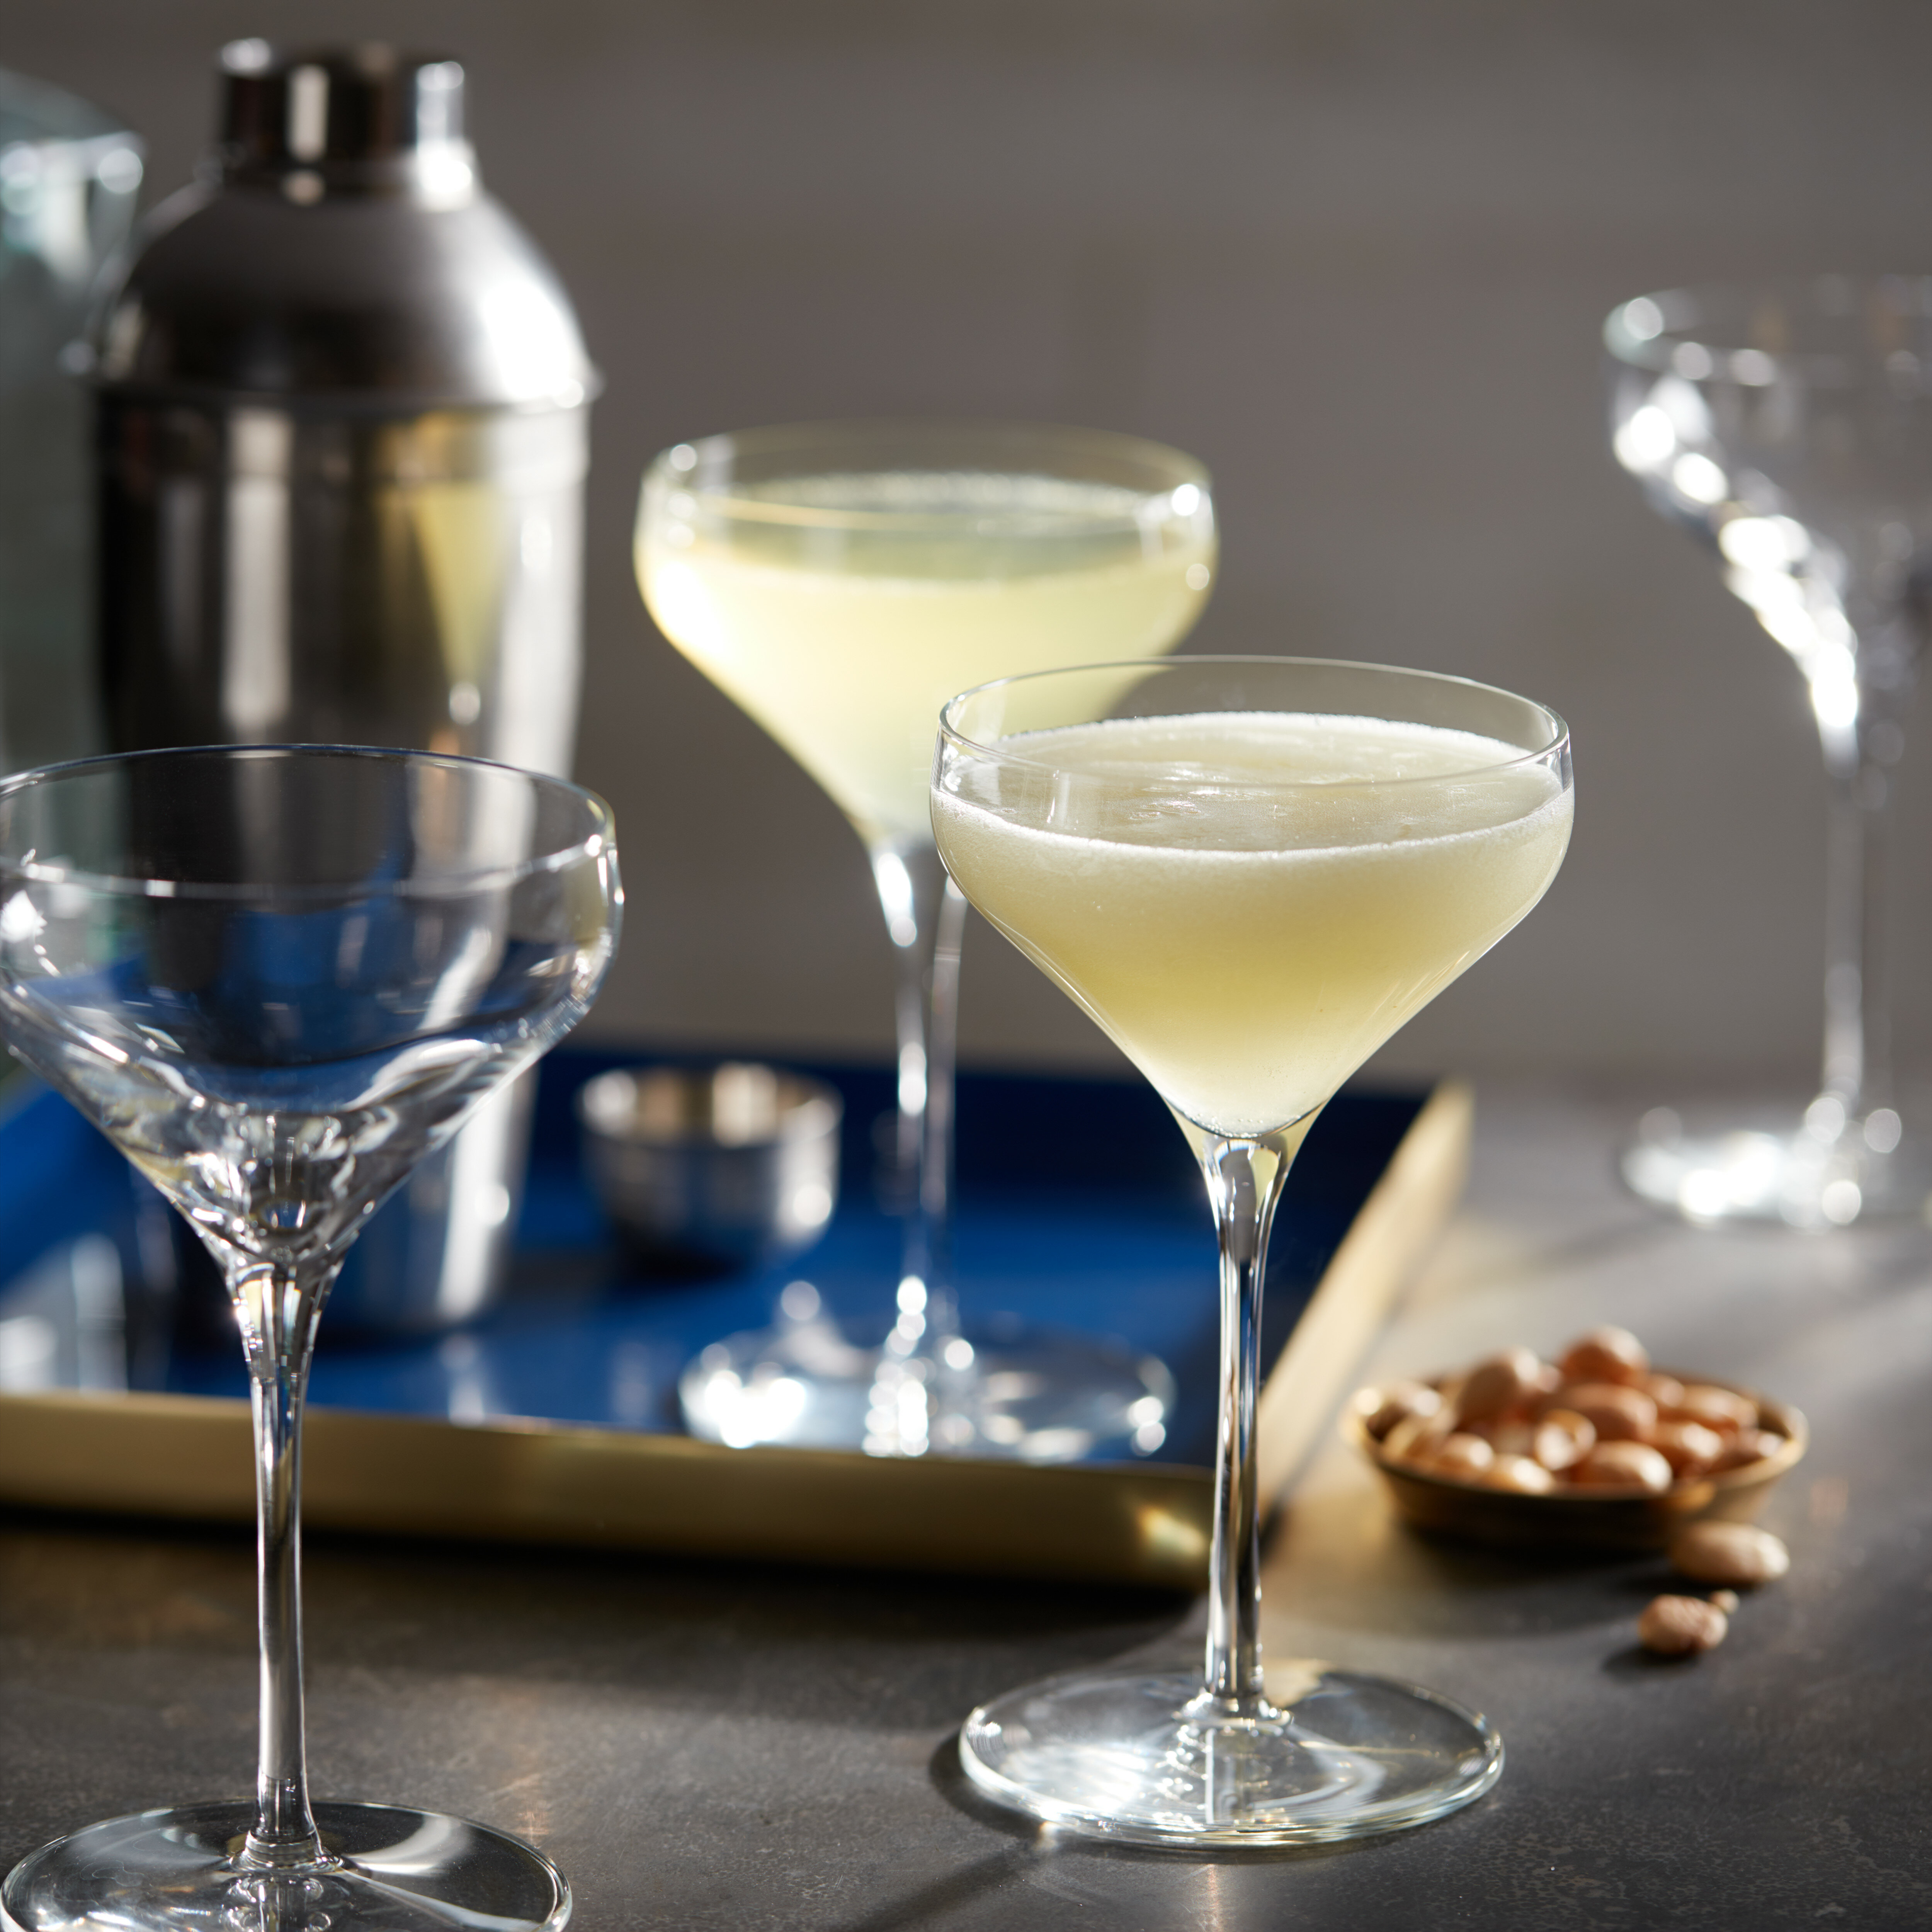  Vintage Art Deco Coupe Glasses, Set of 4, 7 oz Classic Cocktail  Glassware for Champagne, Martini, Manhattan, Cosmopolitan, Sidecar